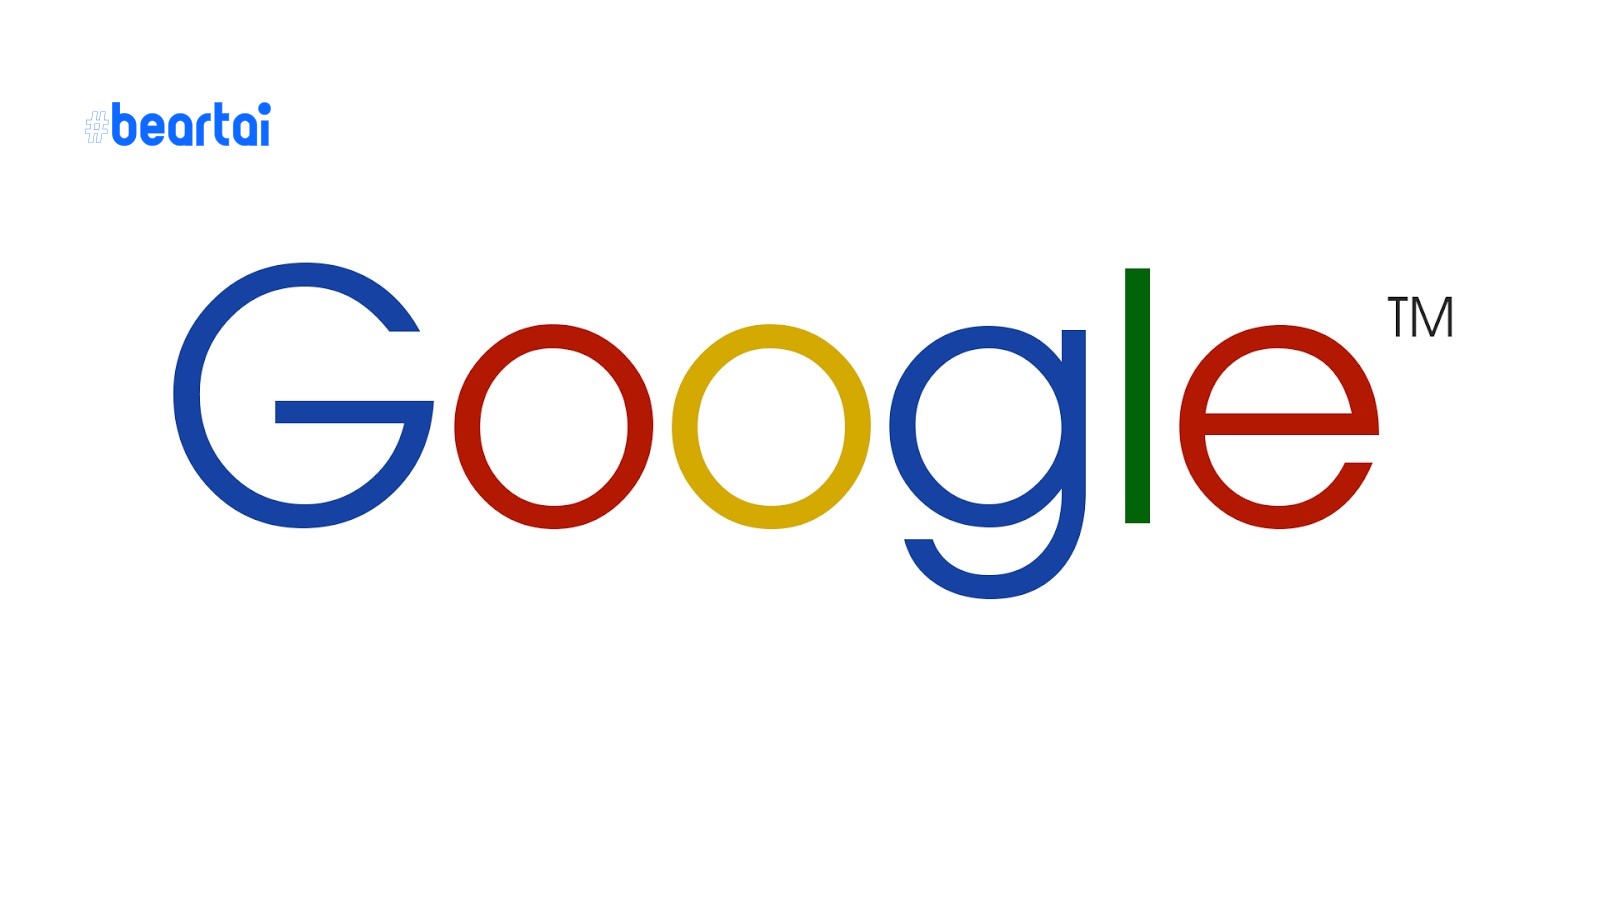 Google ลงทุน 10,000 ล้านเหรียญสหรัฐฯ ในเศรษฐกิจดิจิทัลของอินเดีย